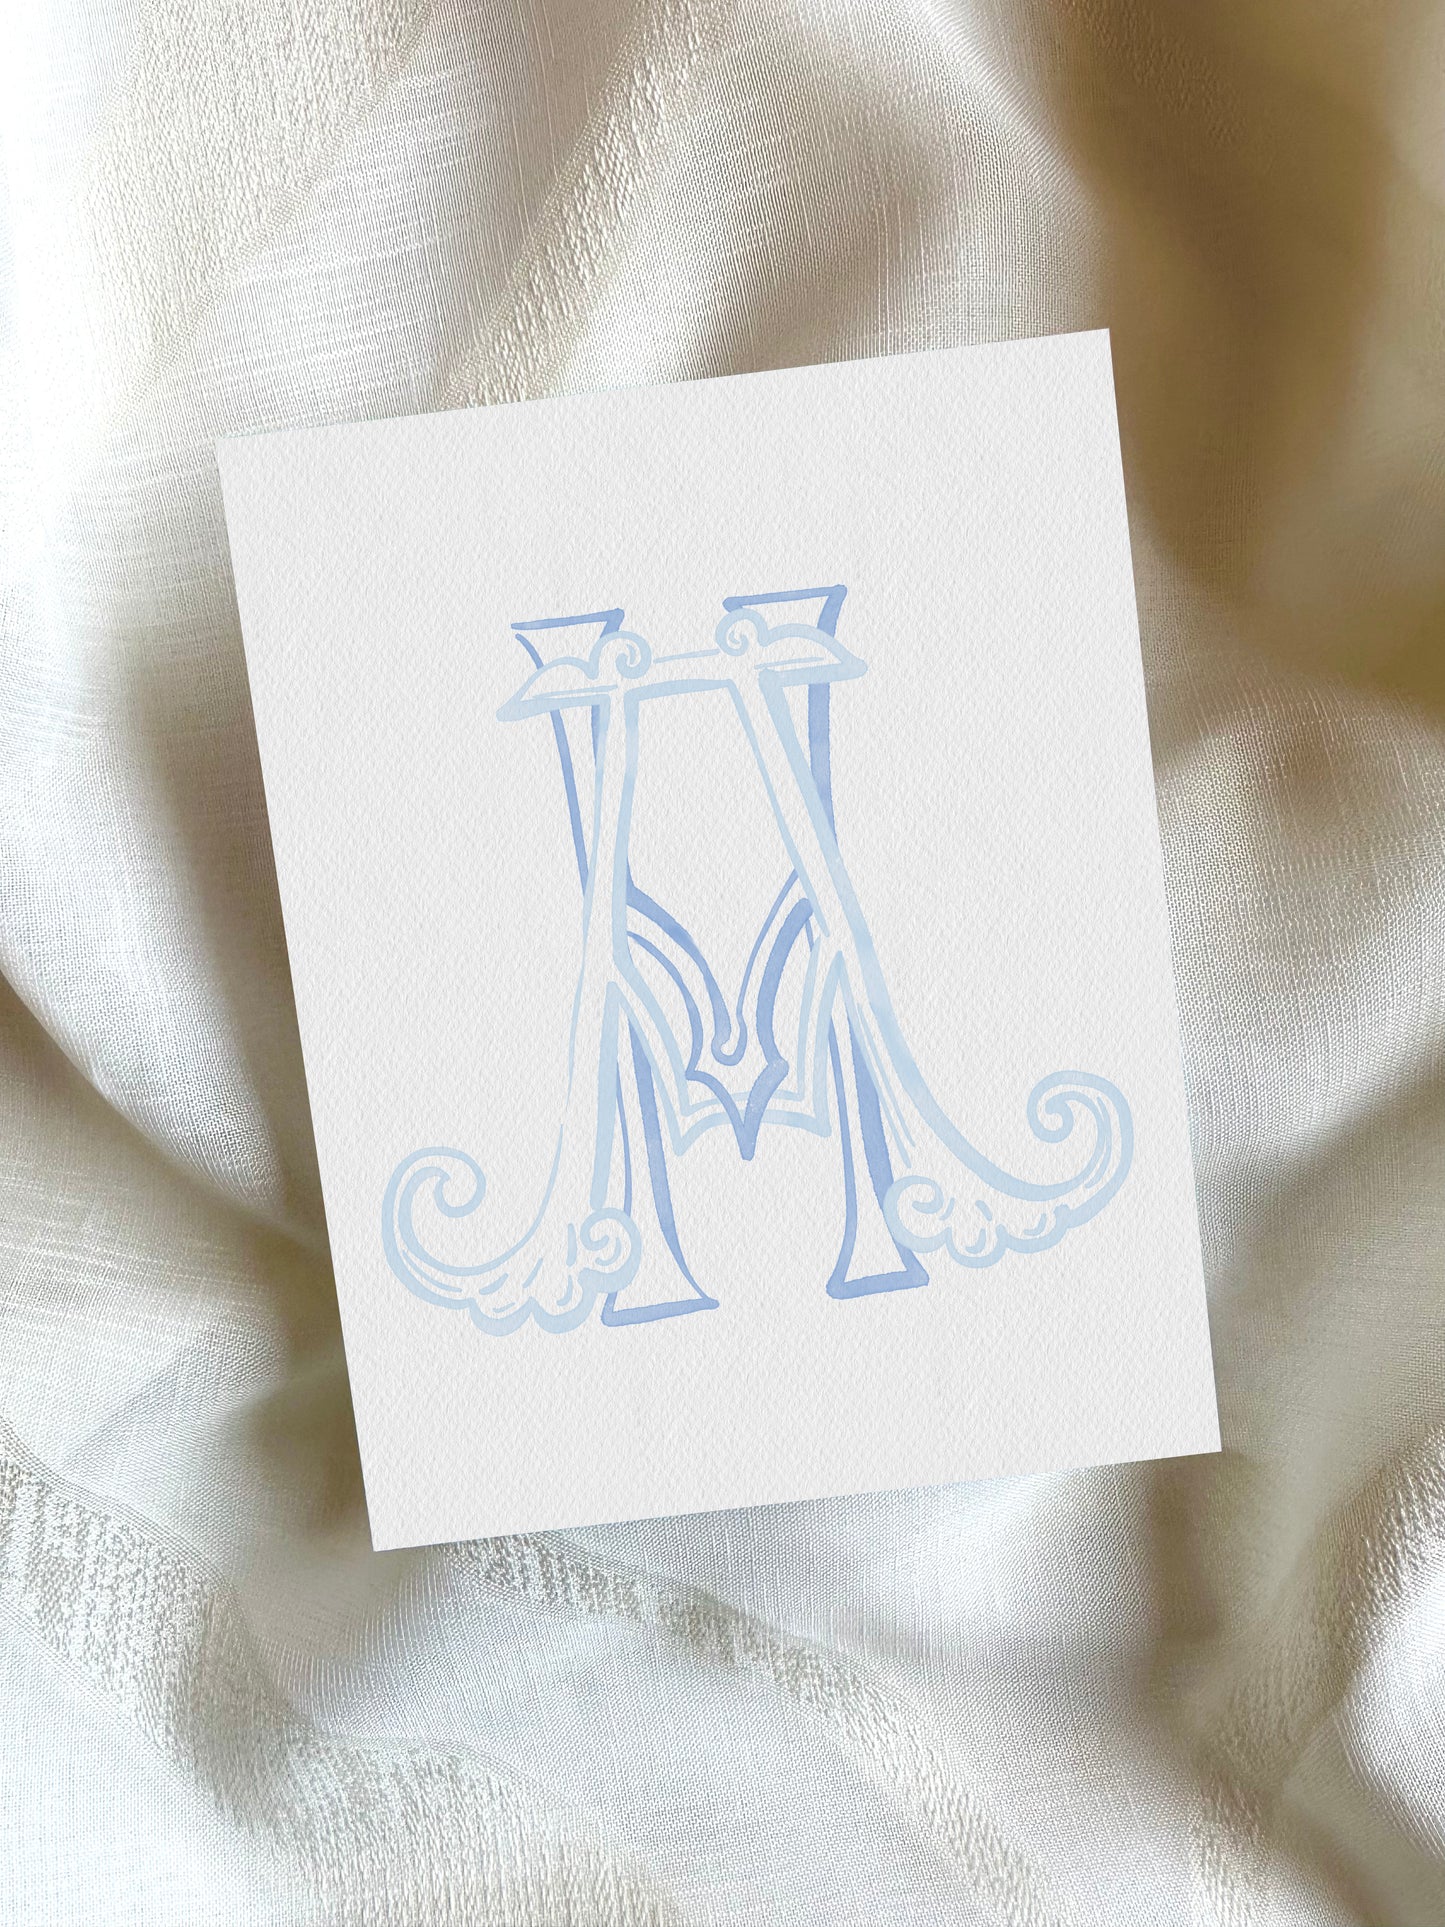 2 Letter Monogram with Letters AH HA | Digital Download - Wedding Monogram SVG, Personal Logo, Wedding Logo for Wedding Invitations